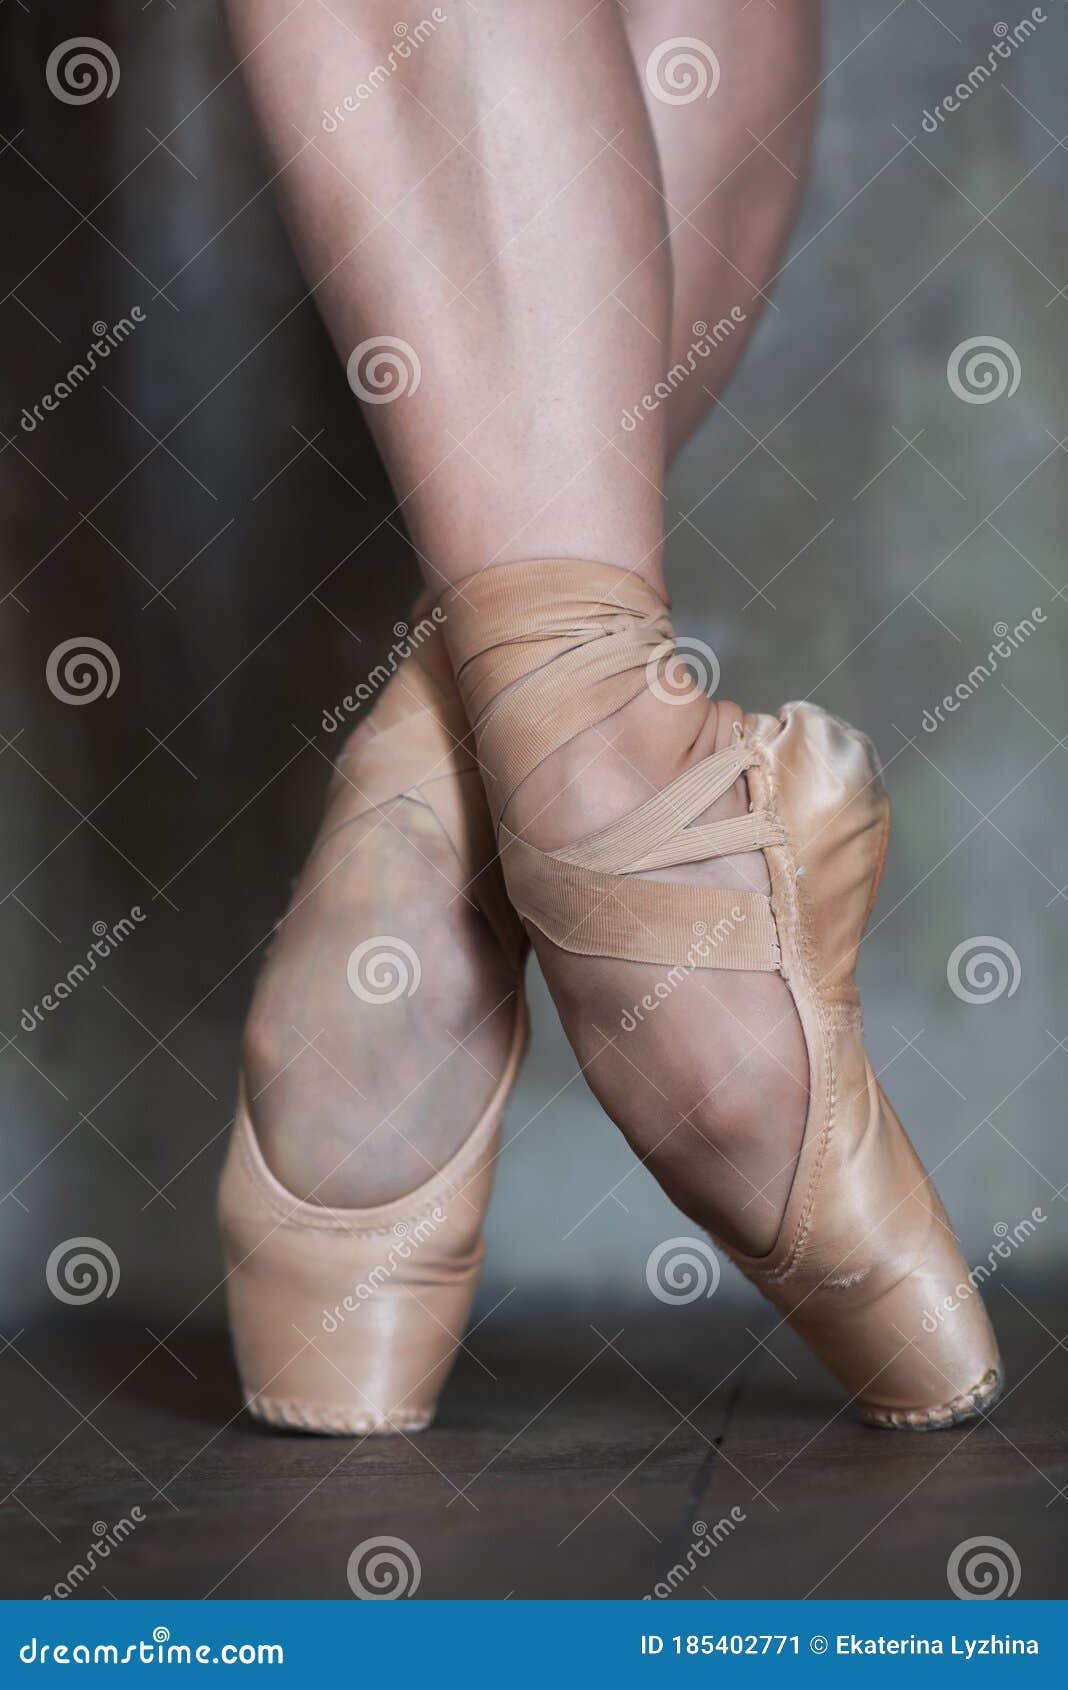 Feet Of Prima Ballerina Stock Image. Image Of Sneakers - 185402771